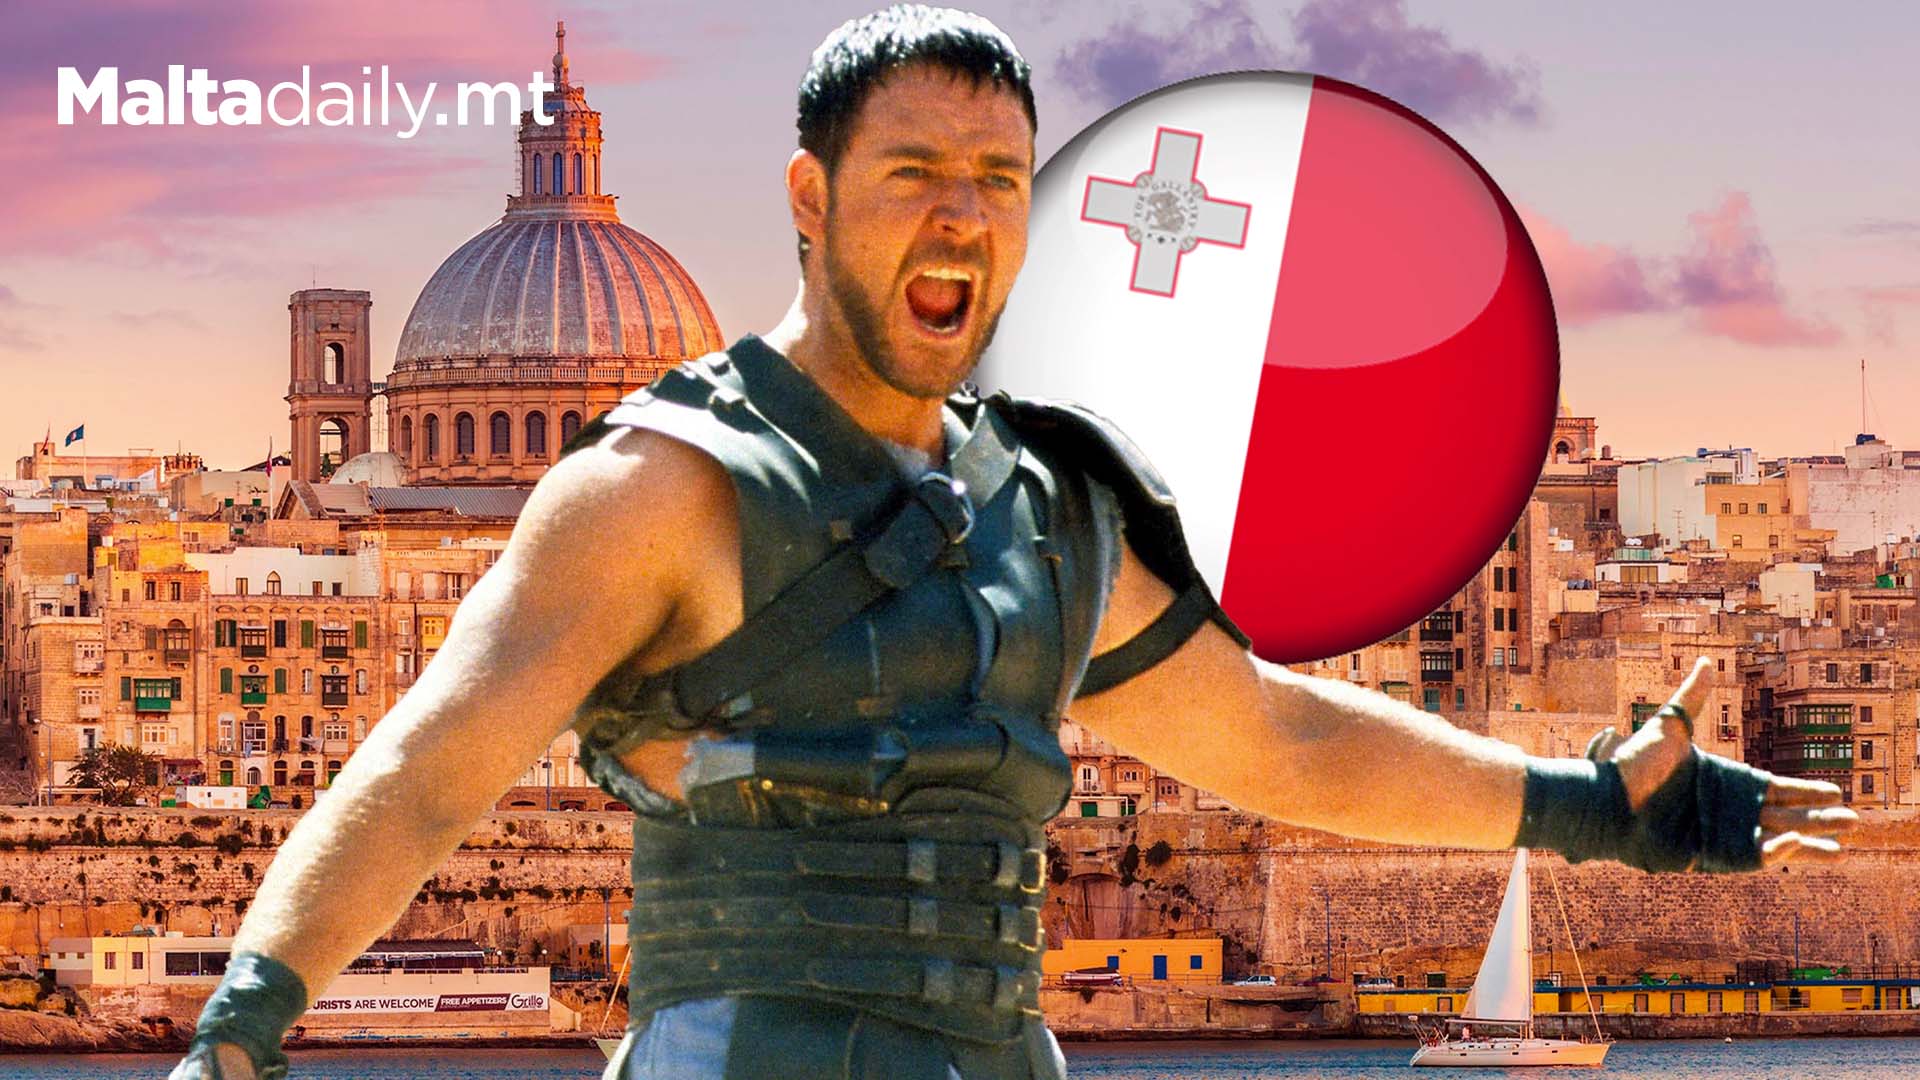 Gladiator 2 To Resume Production In Malta Next Week